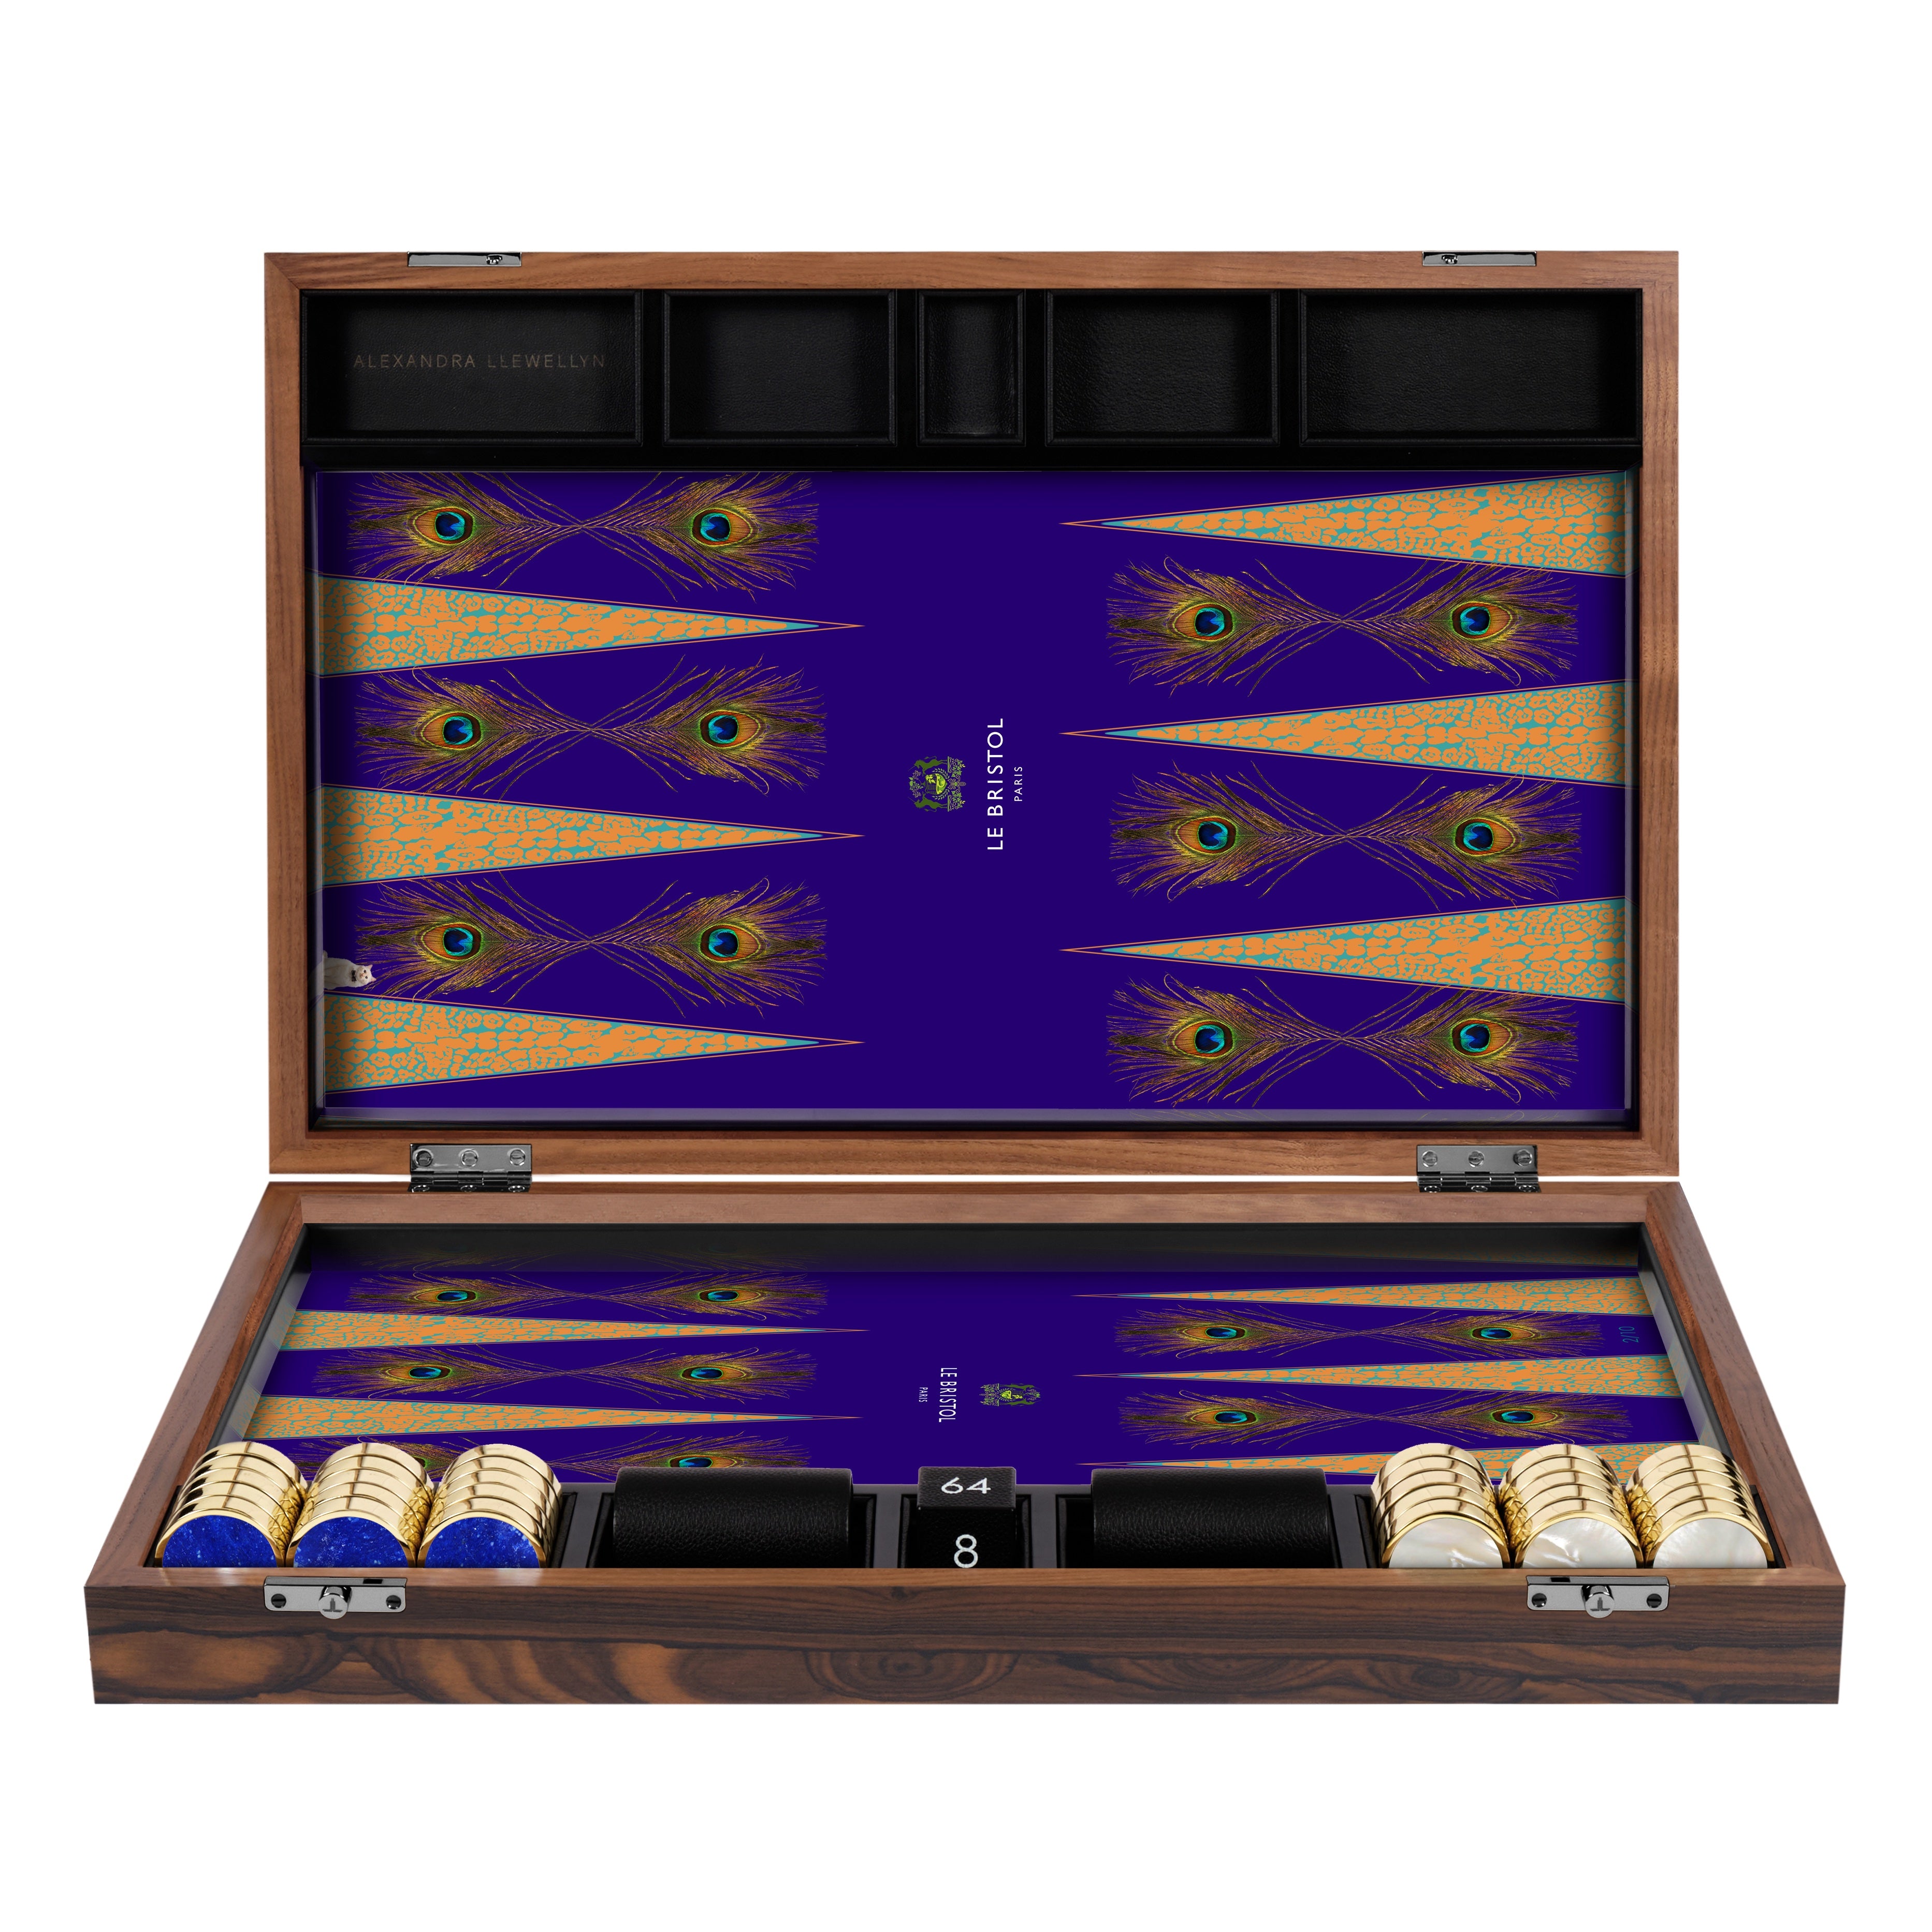 Le Bristol Paris backgammon board - Oetker Collection Hotels Boutique